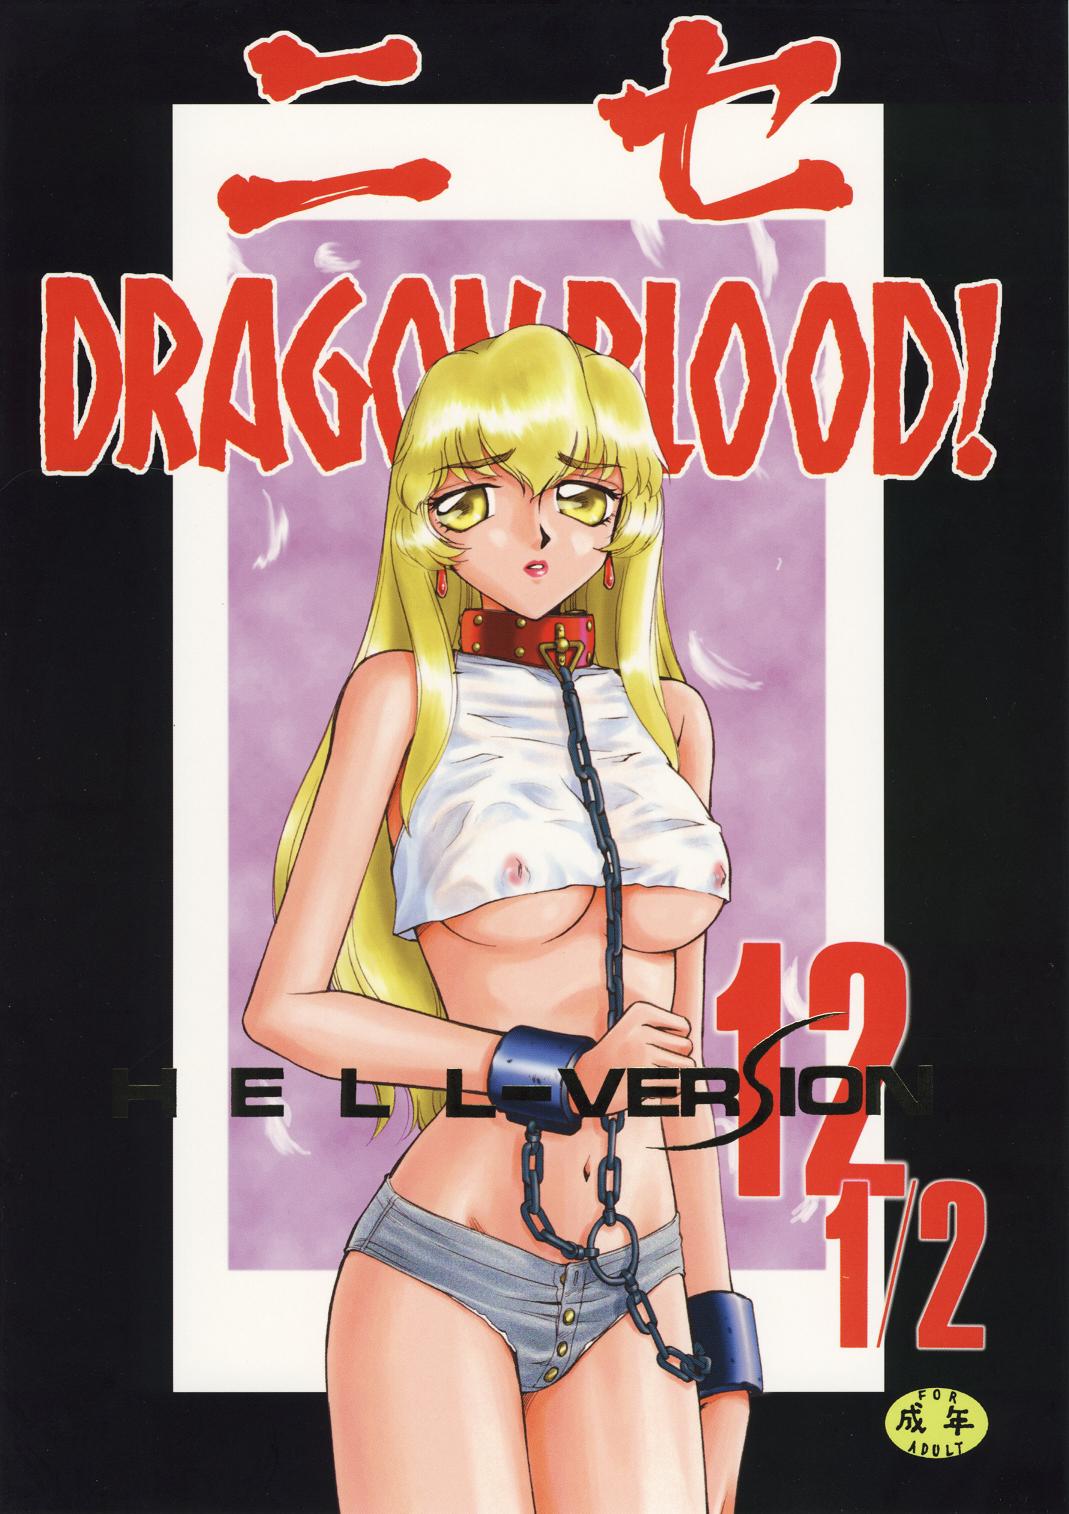 (CR34) [LTM. (Hajime Taira)] Nise Dragon Blood! 12 1/2 page 1 full